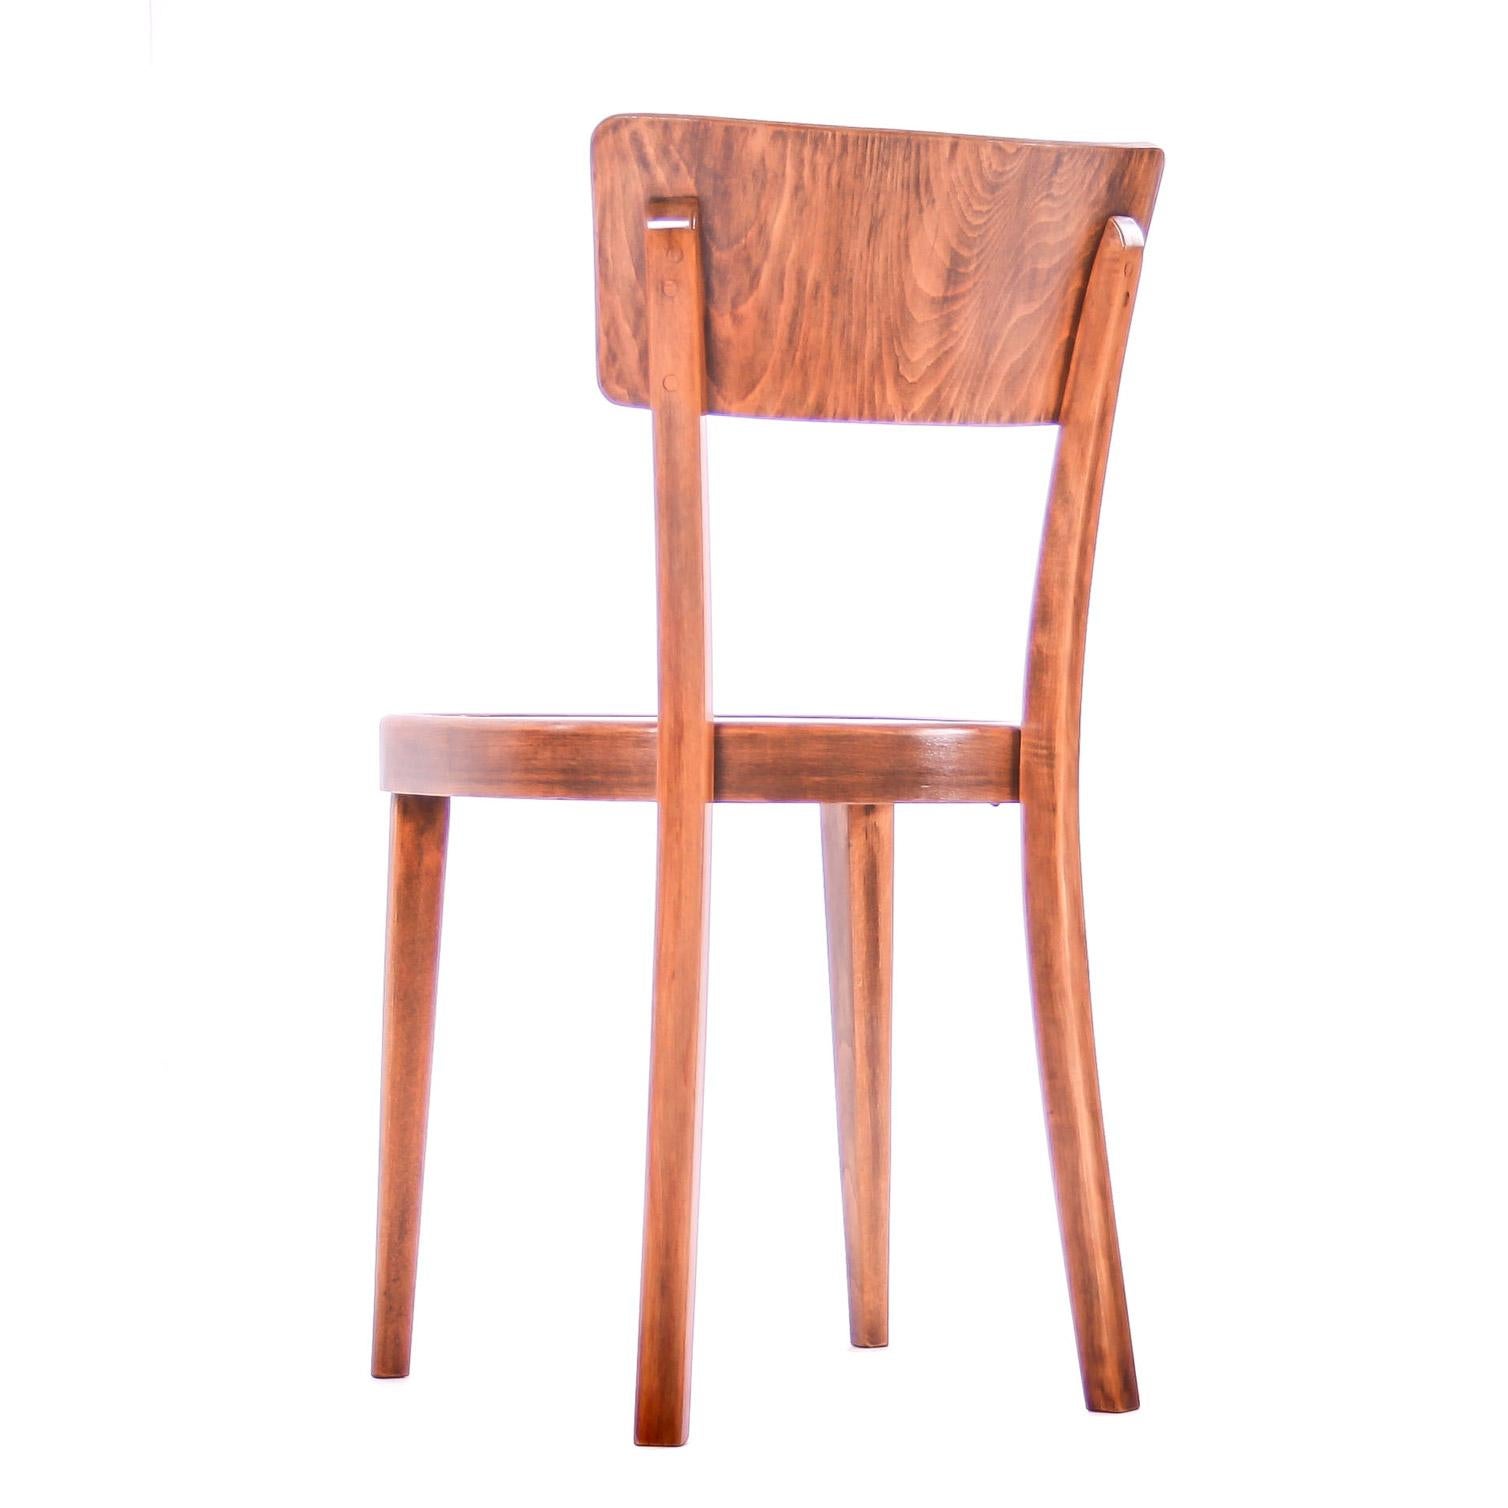 Czech Interwar Avantgard Design Dining Chairs by Jindrich Halabala 'UP Zavody' For Sale 3